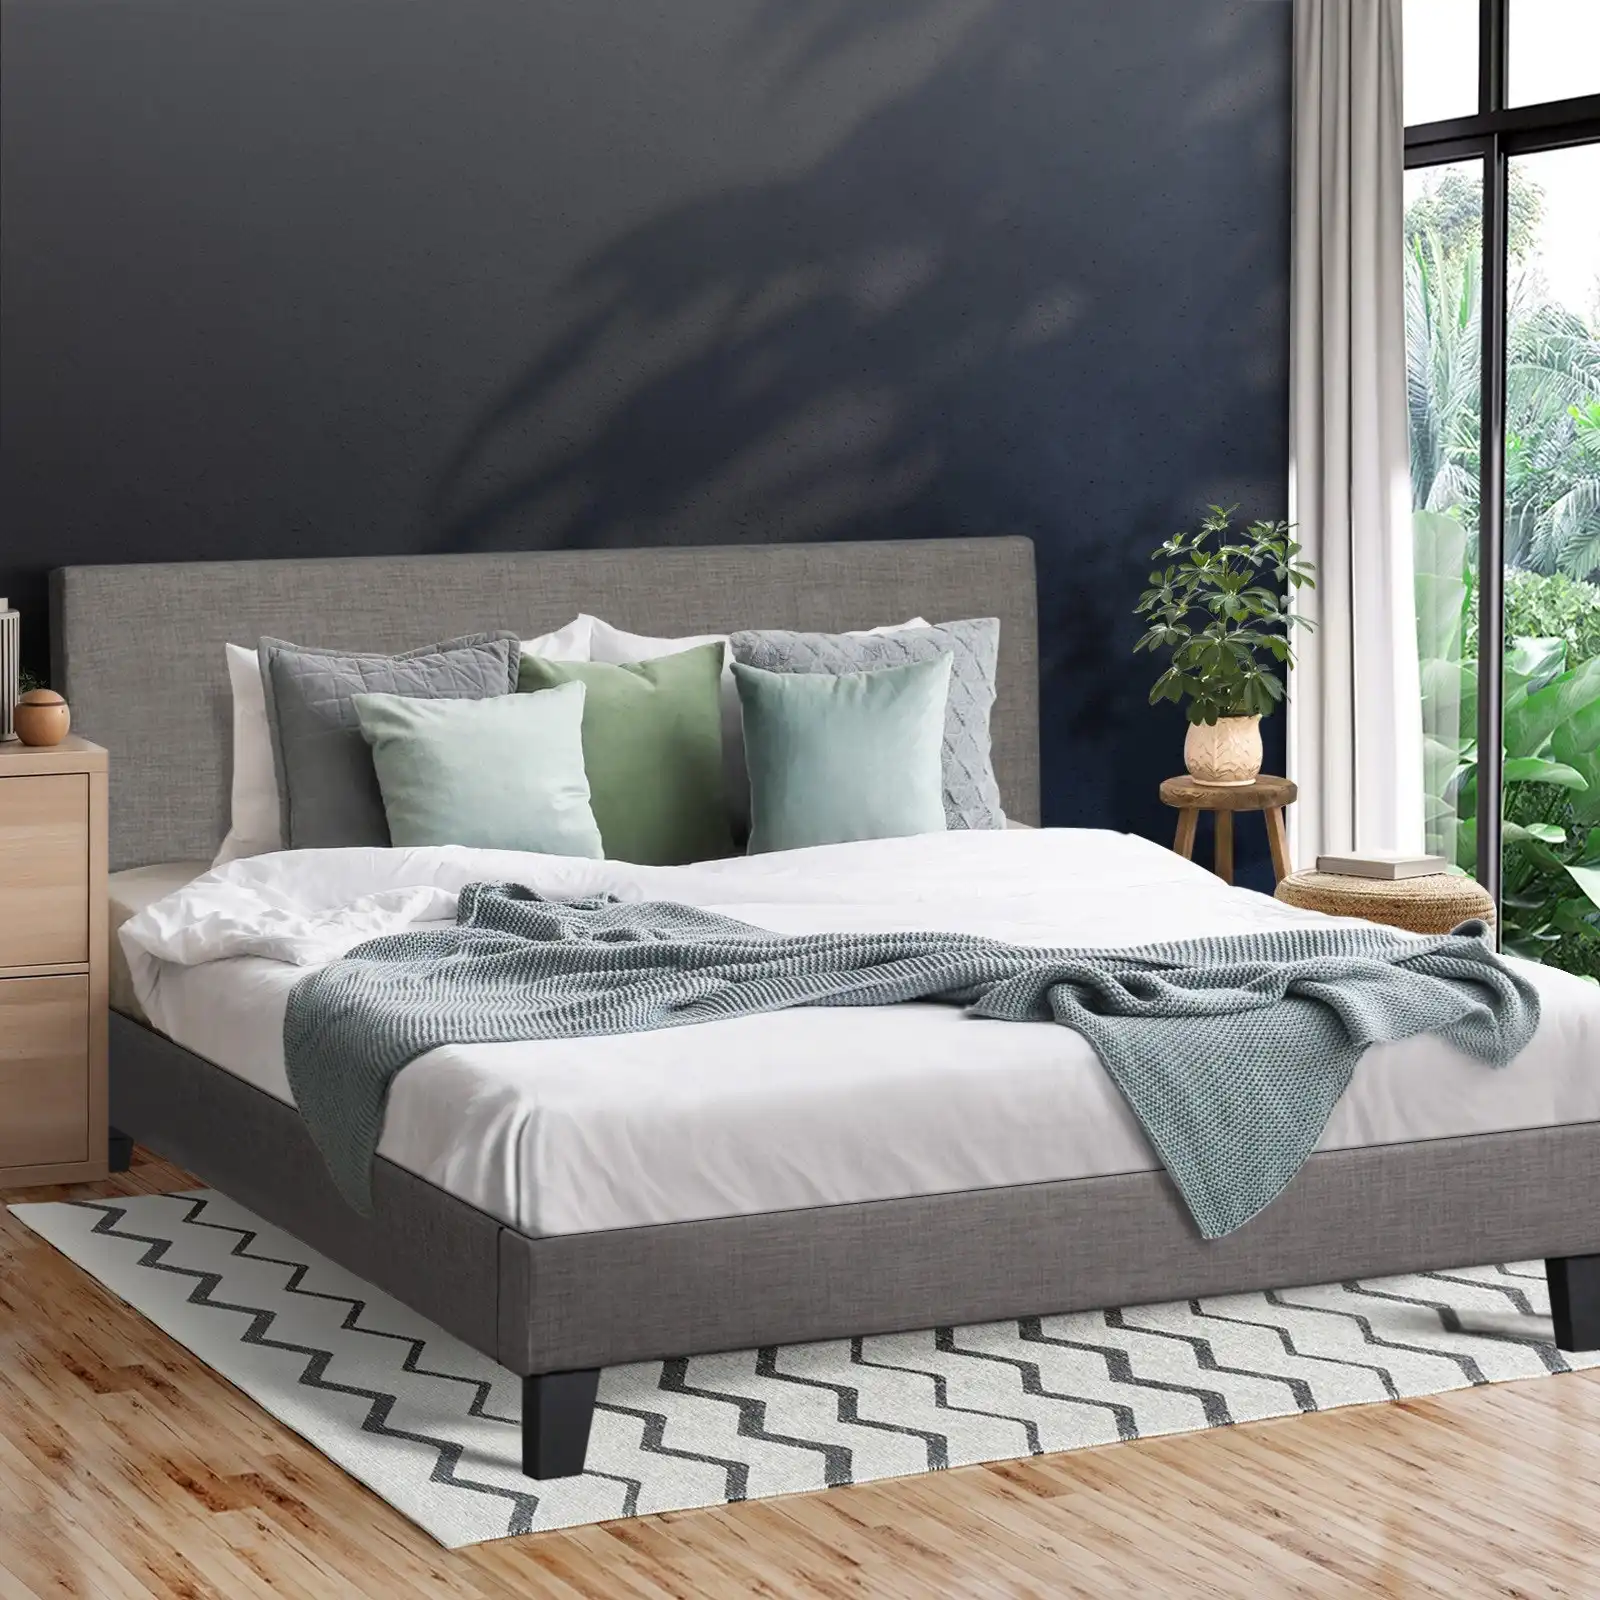 Oikiture Bed Frame Queen Size Mattress Base Platform Wooden Slats Grey Fabric